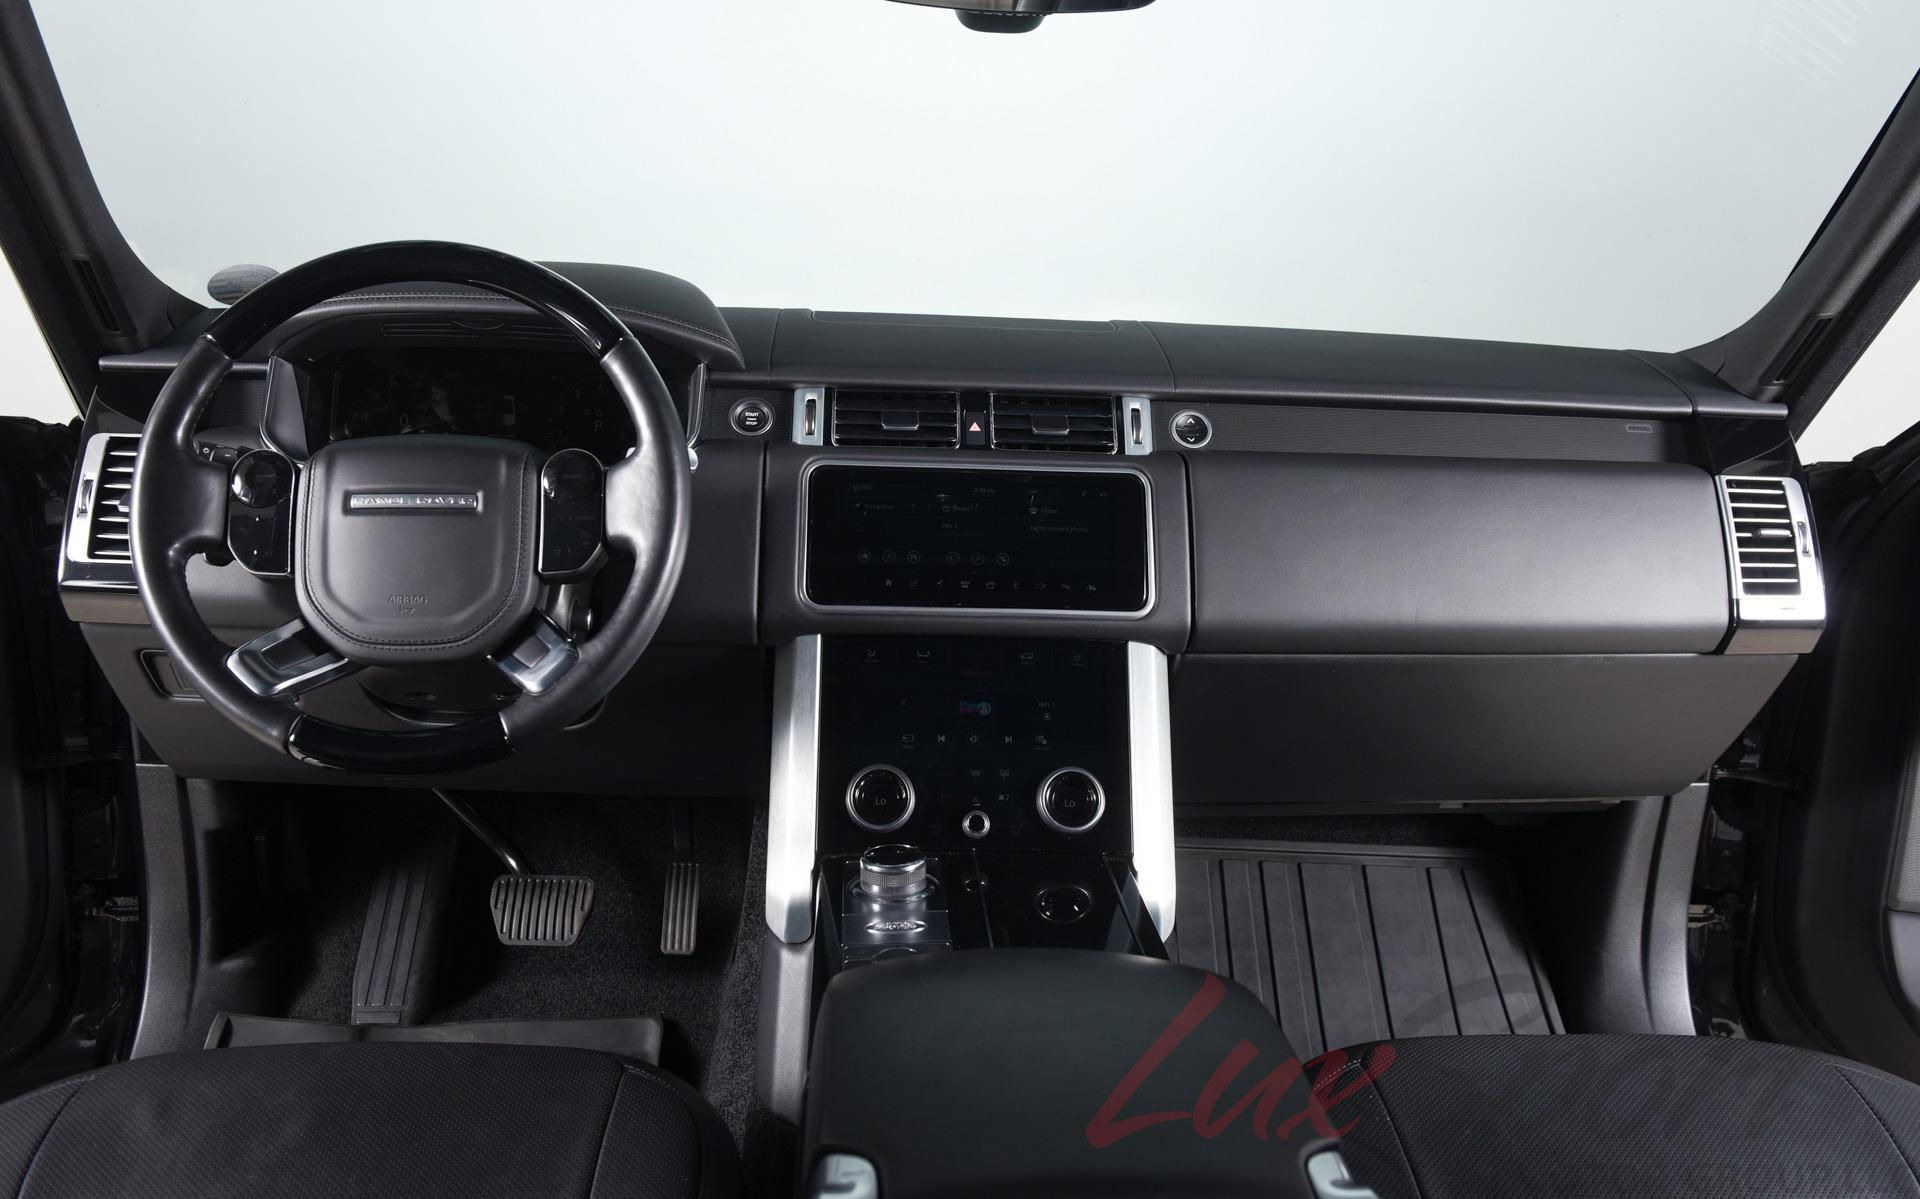 Used 2020 Land Rover Range Rover HSE | Plainview, NY